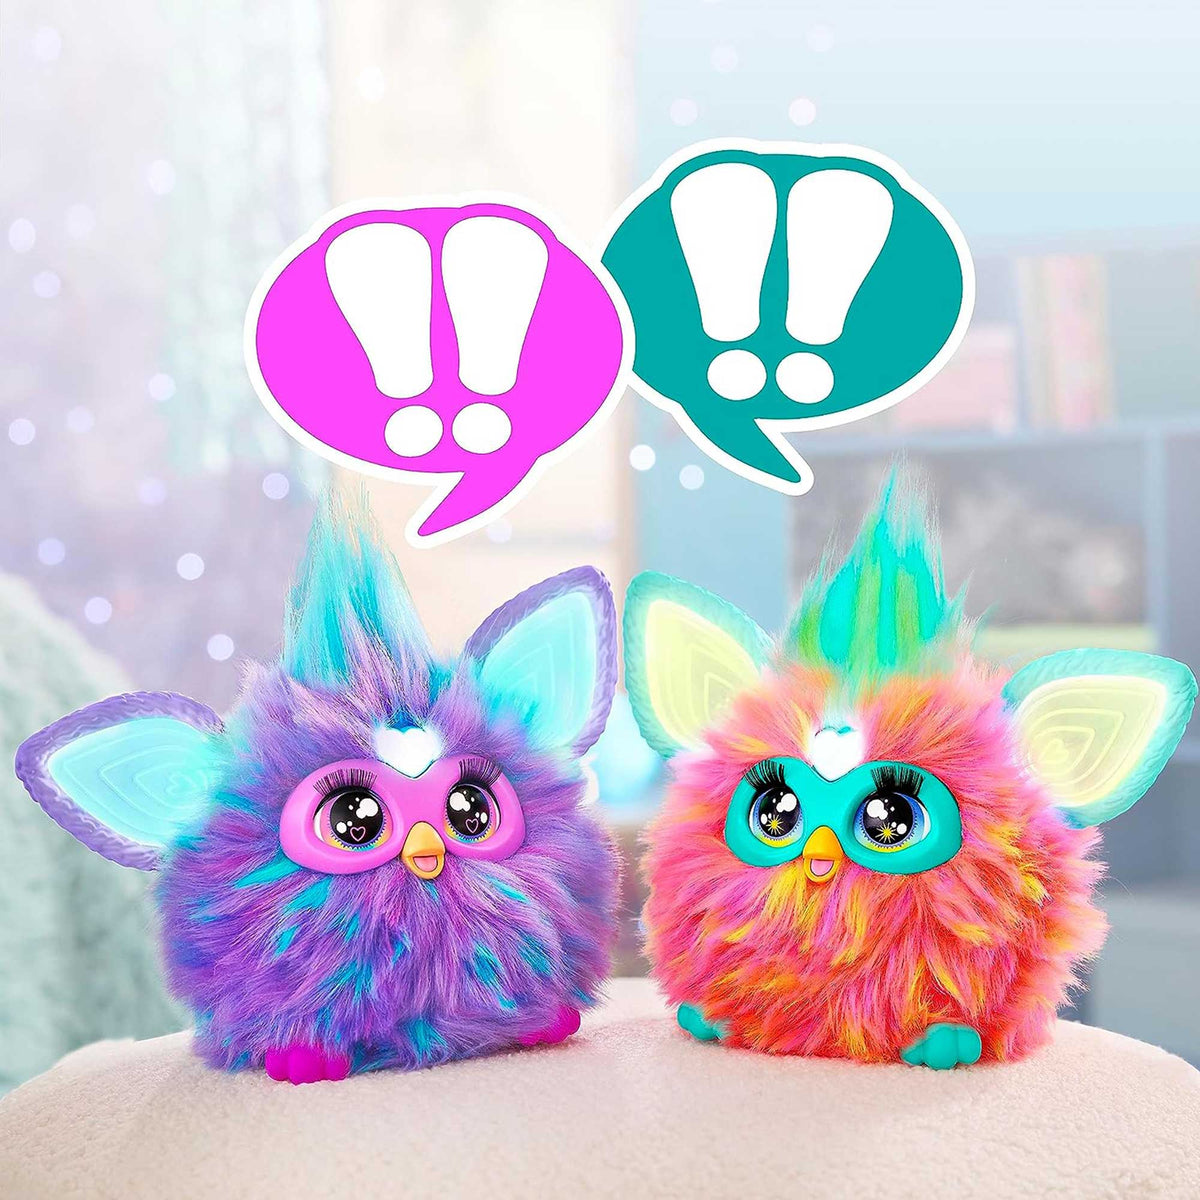 Furby Purple Interactive Toy